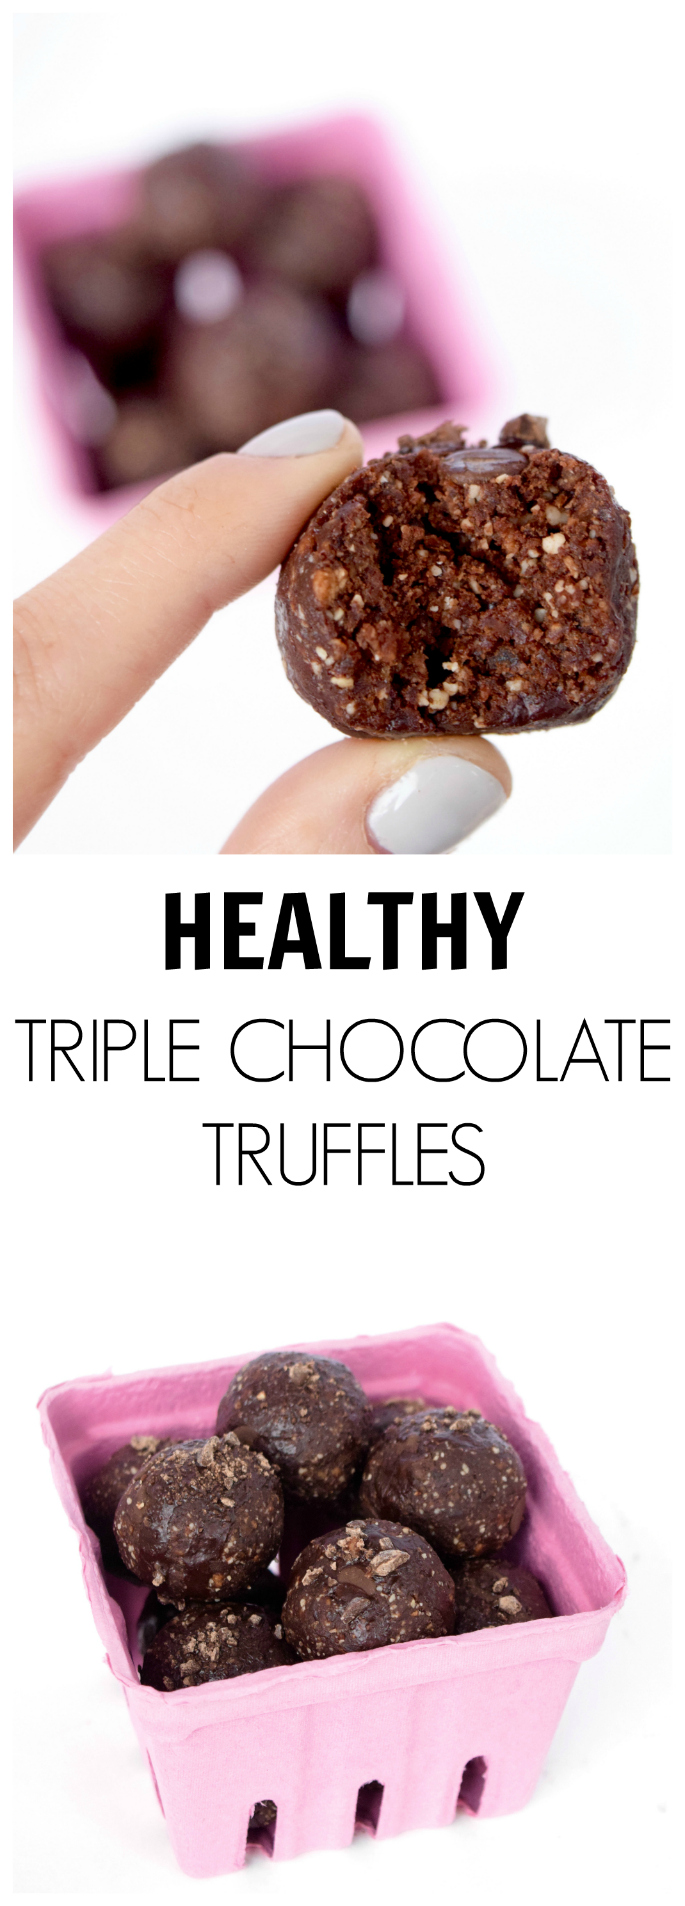 HEALTHY TRIPLE CHOCOLATE TRUFFLES